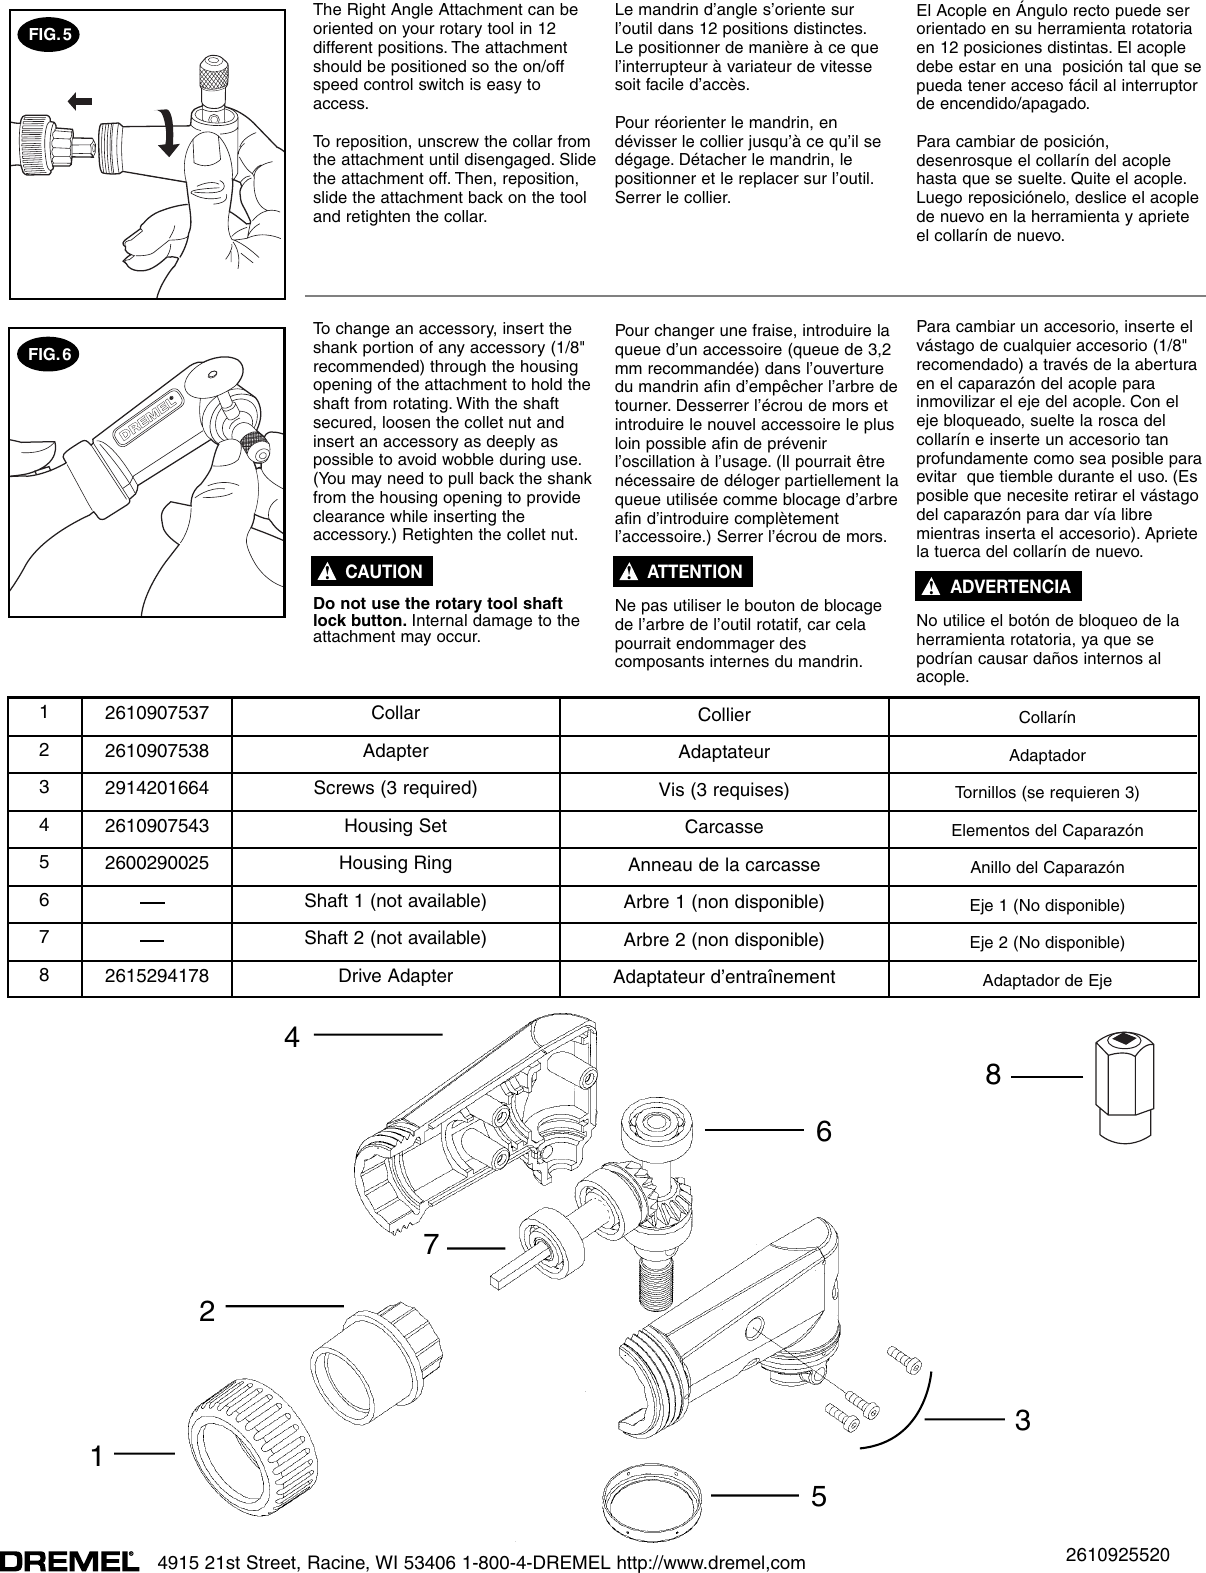 Page 2 of 2 - Dremel Dremel-575-Users-Manual-  03/15/00 Dremel-575-users-manual